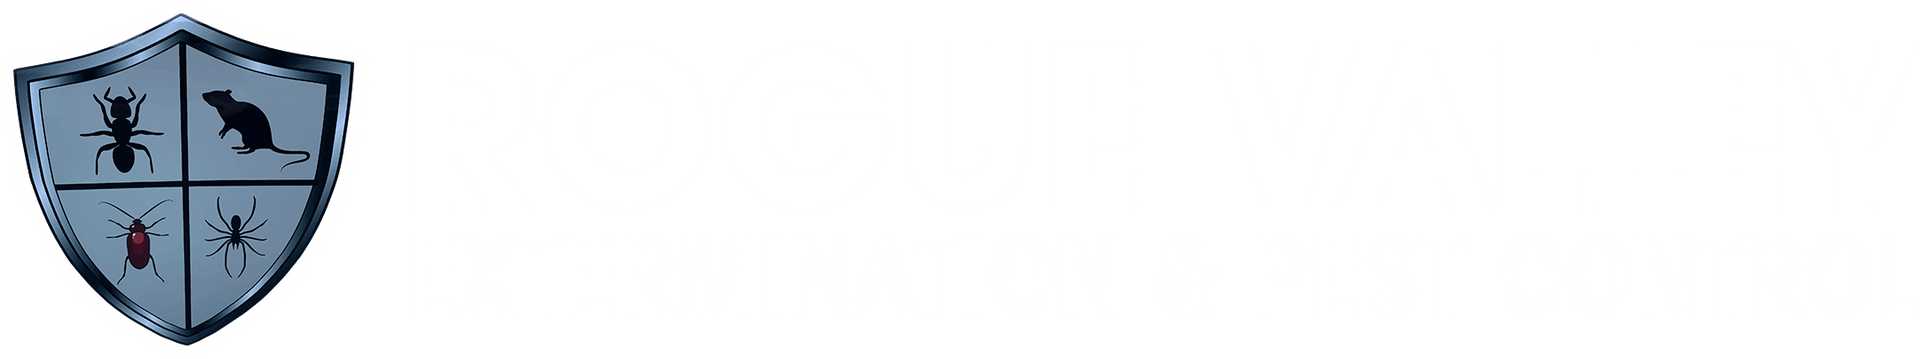 Rogue Valley Extermination & Pest Control - Logo